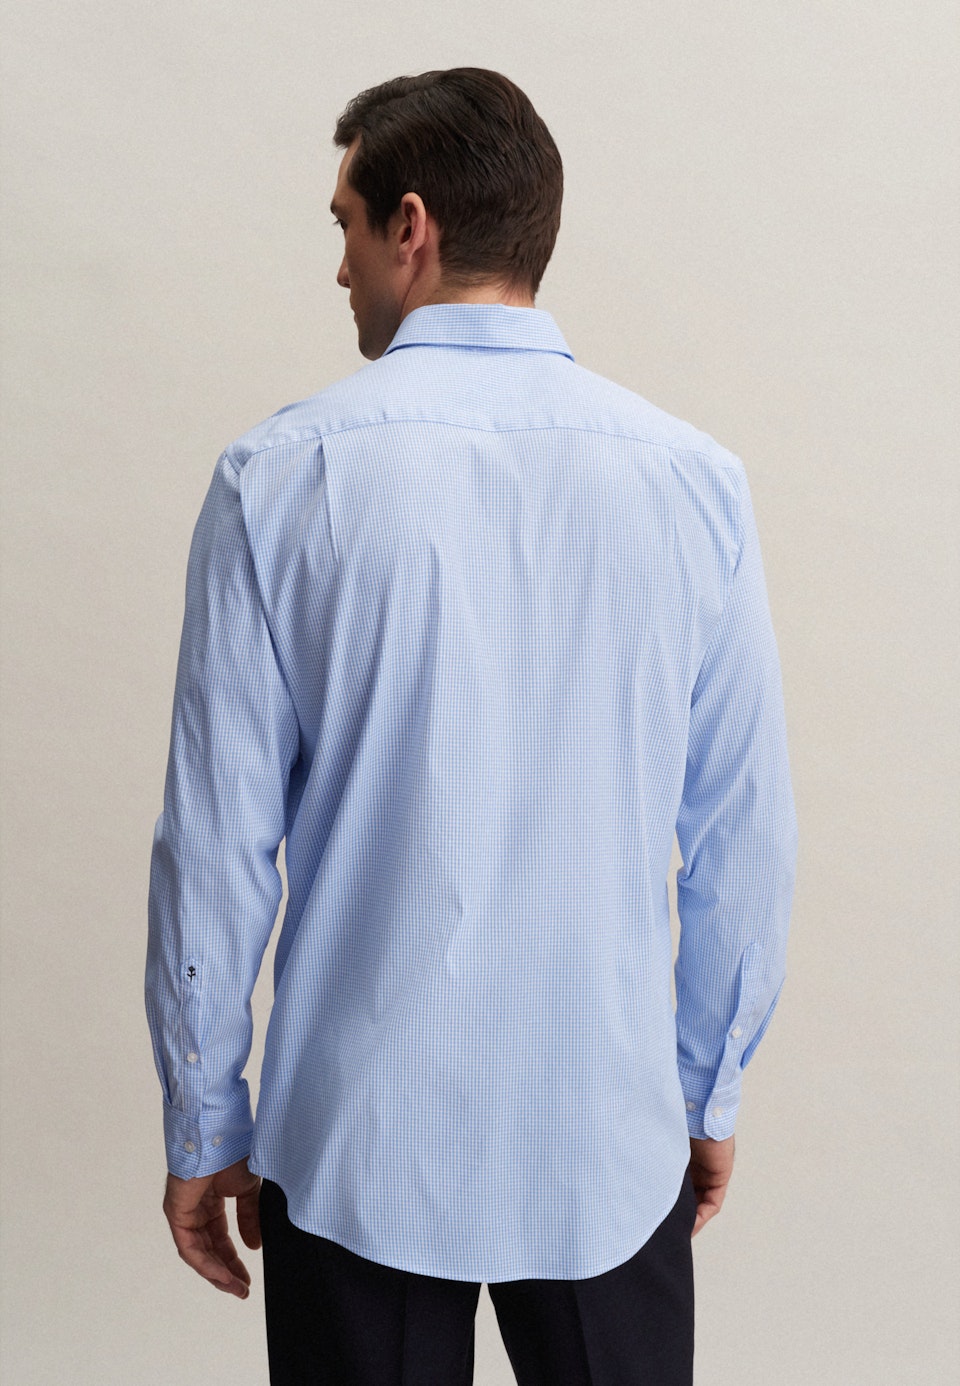 Performance shirt in Light Blue |  Seidensticker Onlineshop